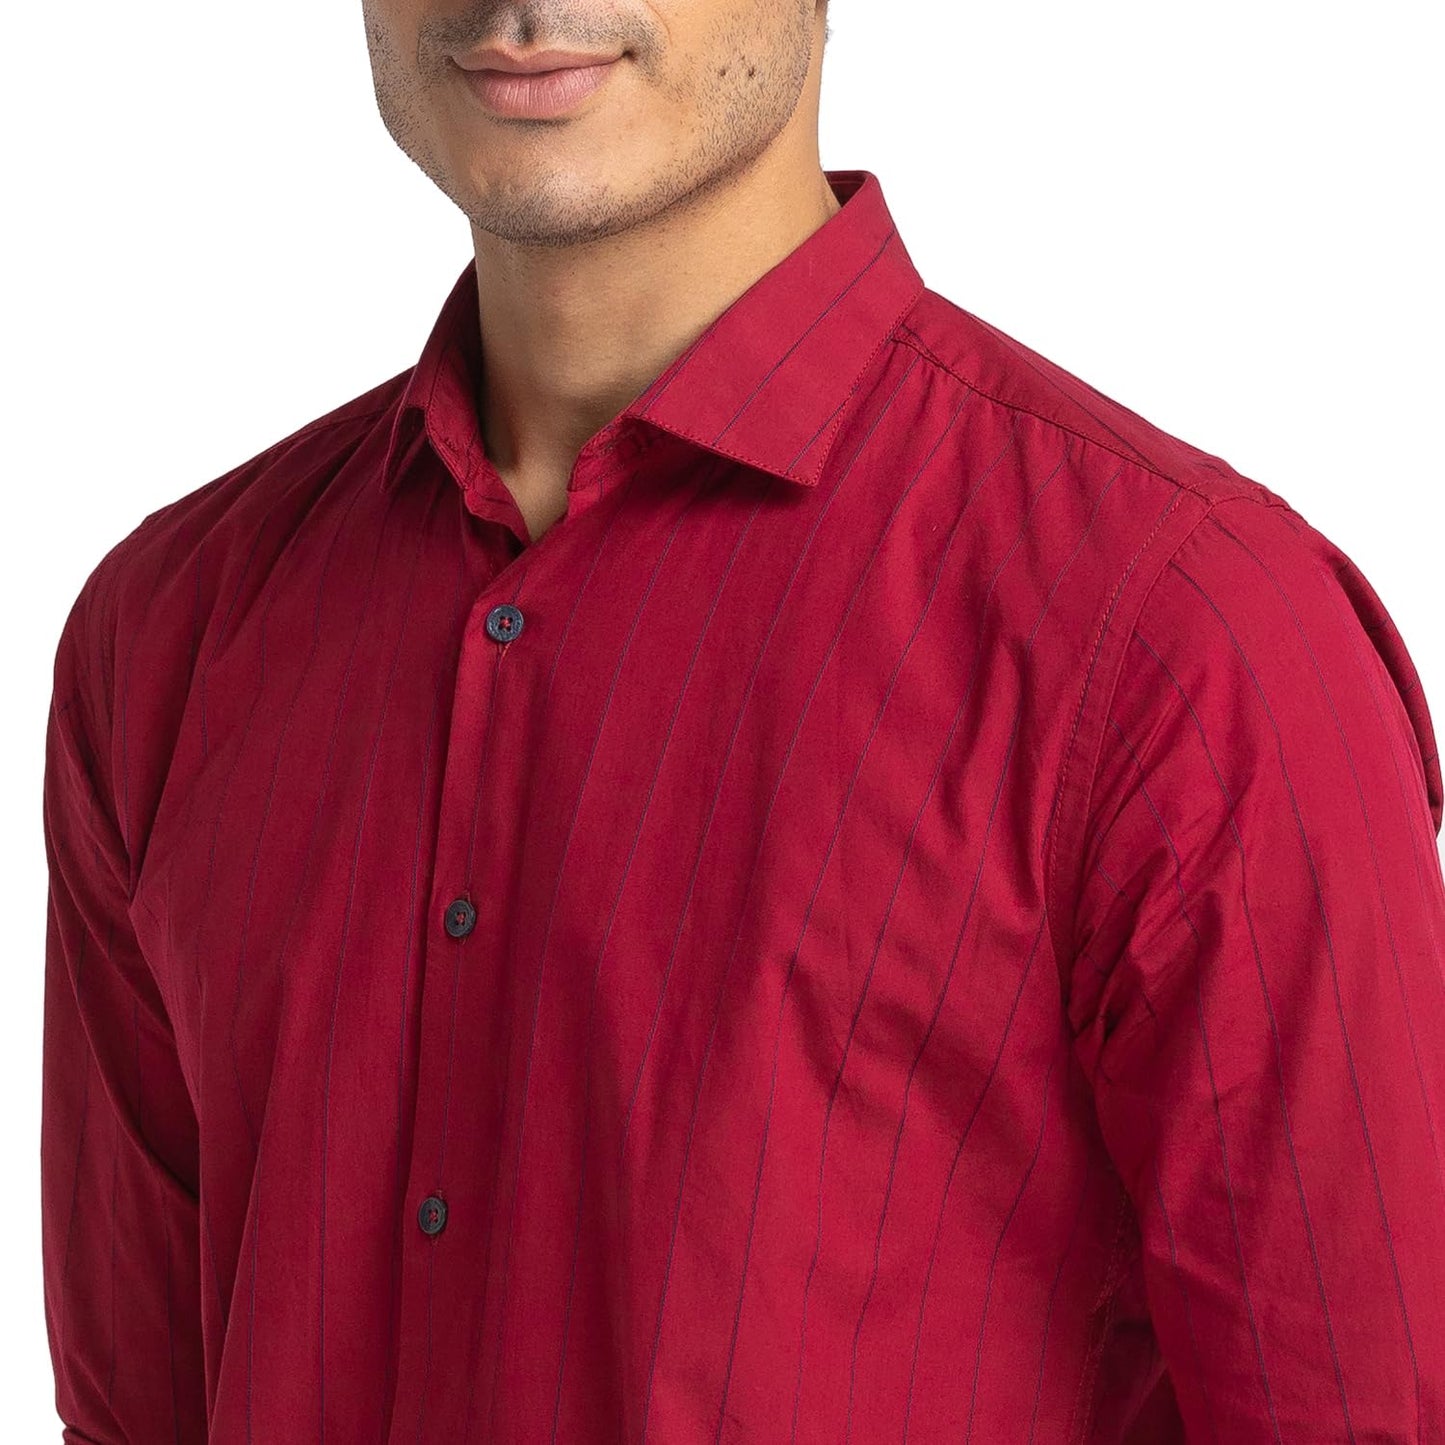 Park Avenue Slim Fit Dark Red Casual Shirt for Men